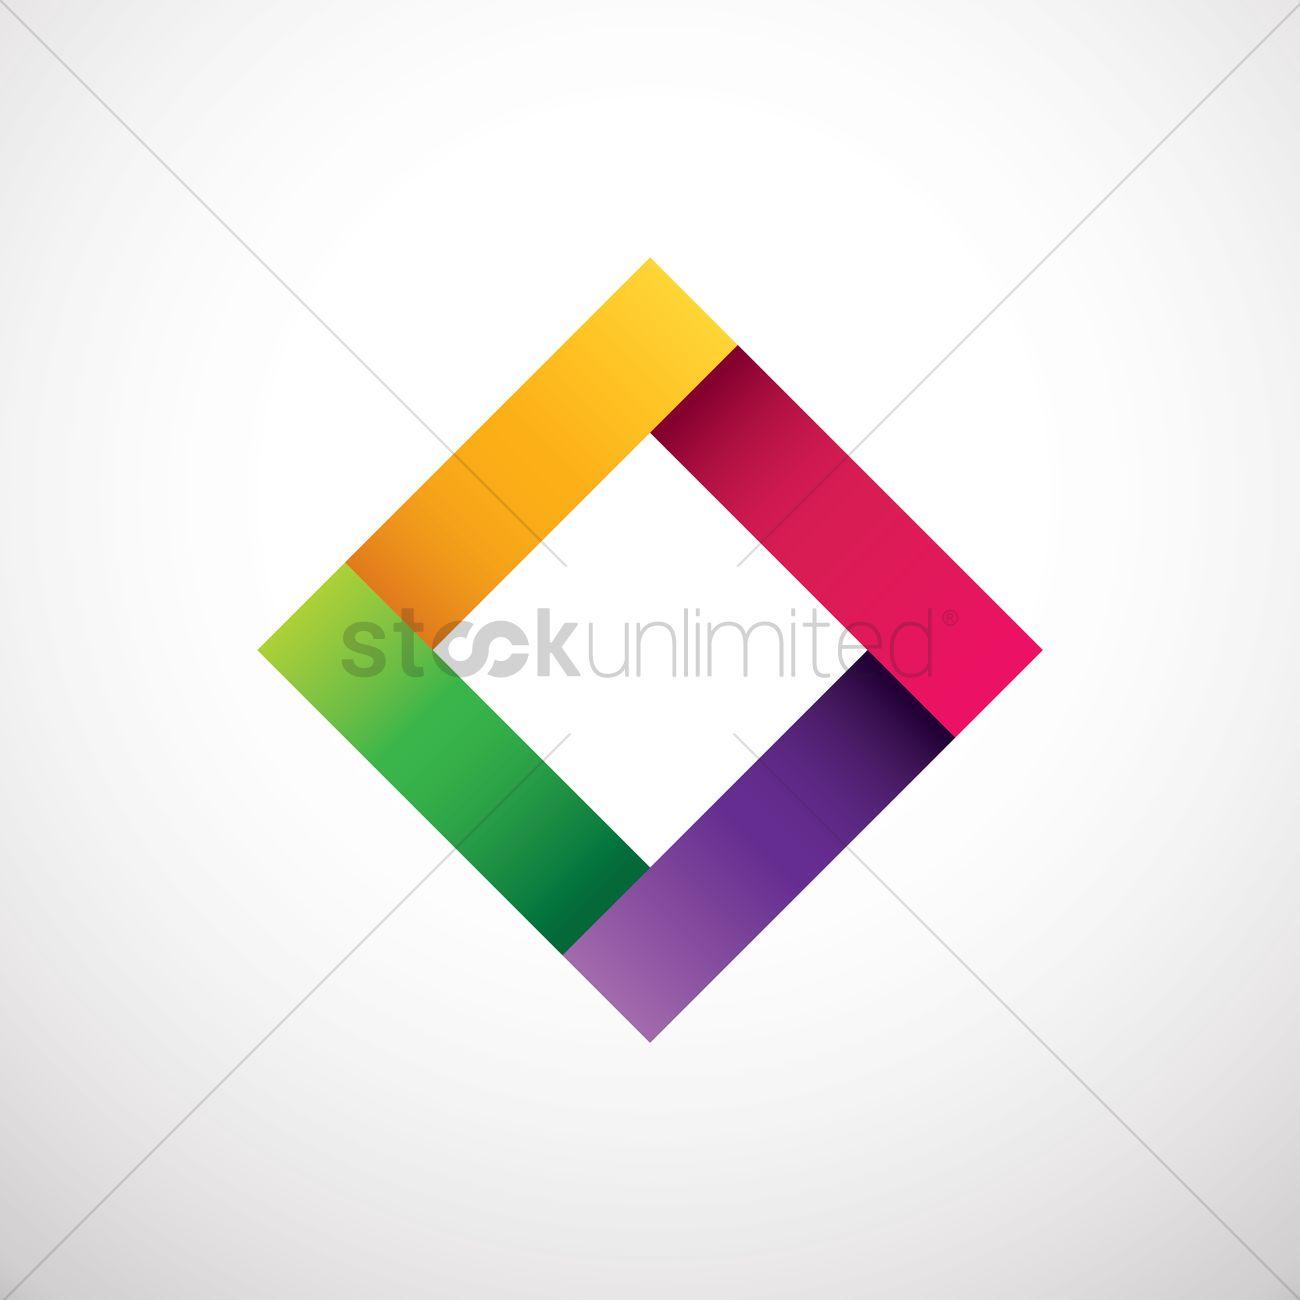 Rhombus Logo - Rhombus logo element Vector Image - 1628084 | StockUnlimited